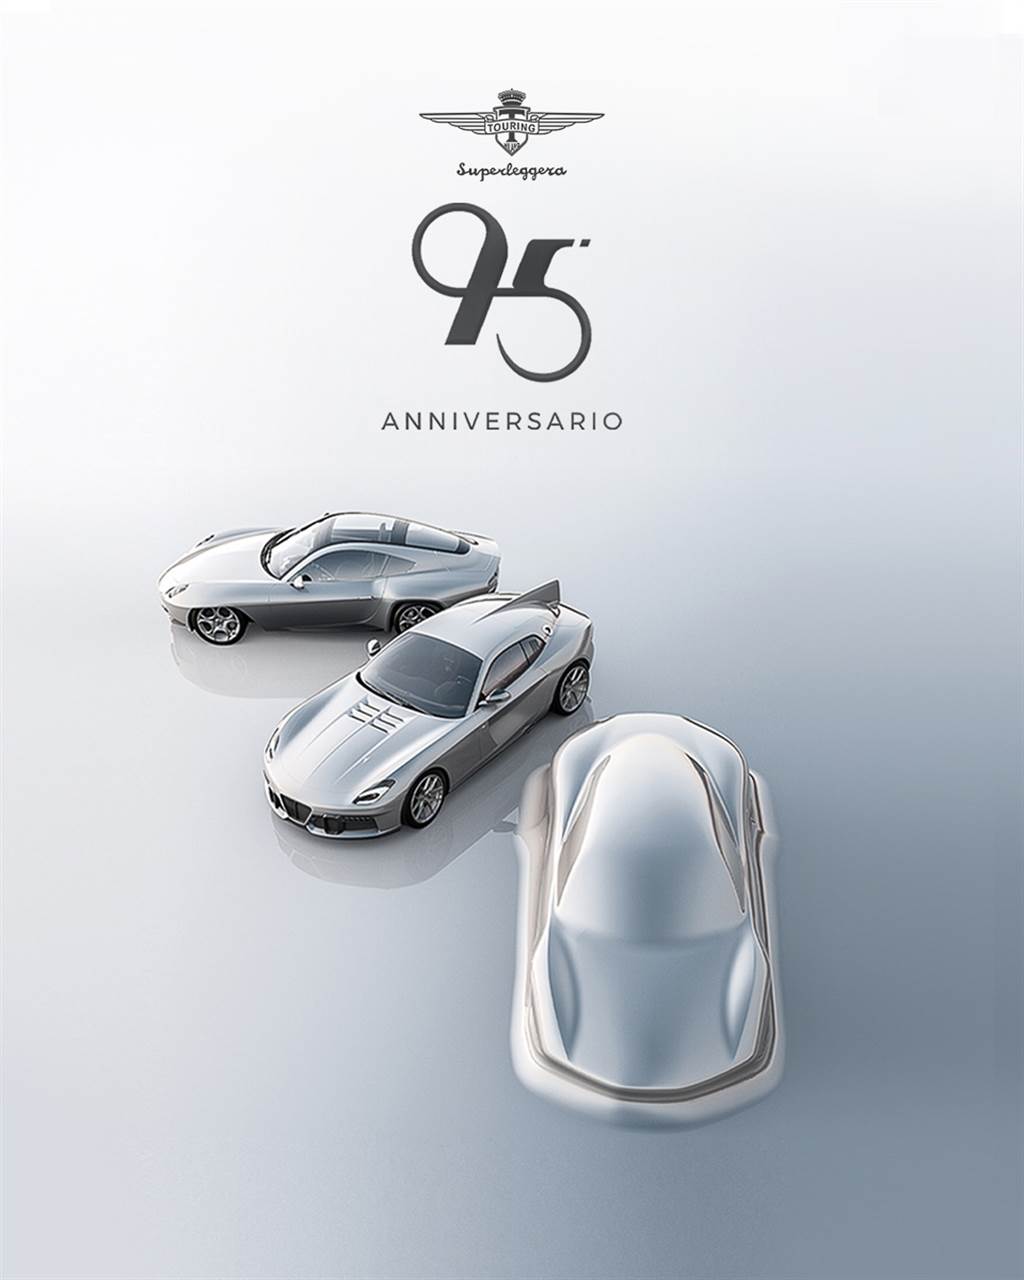 Touring Superleggera 將以首款中置跑車迎接品牌成立 95 週年
